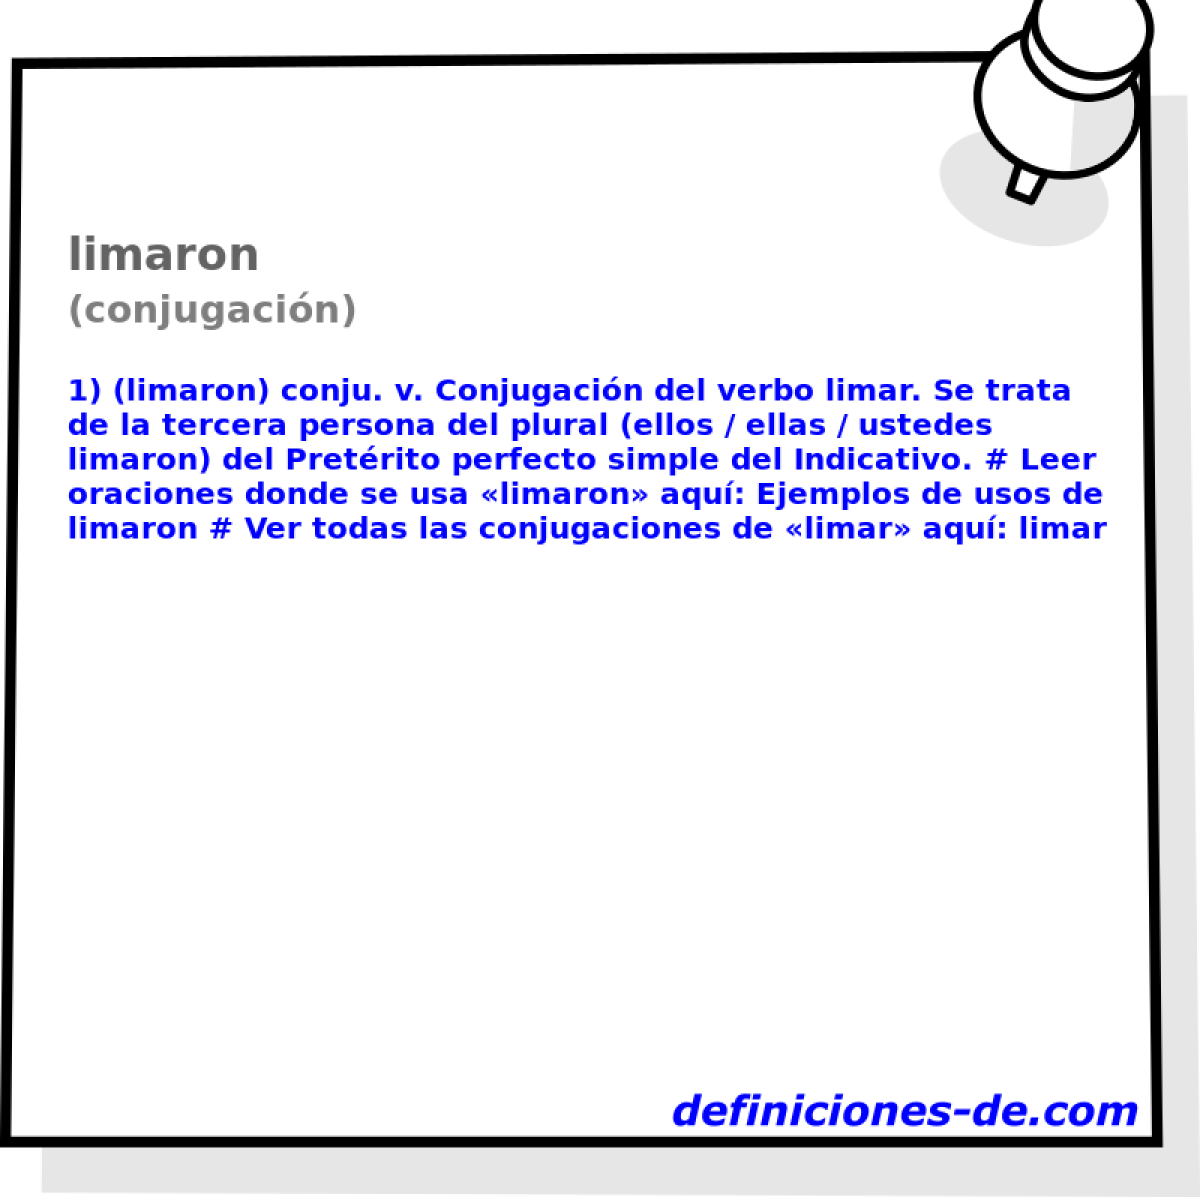 limaron (conjugacin)